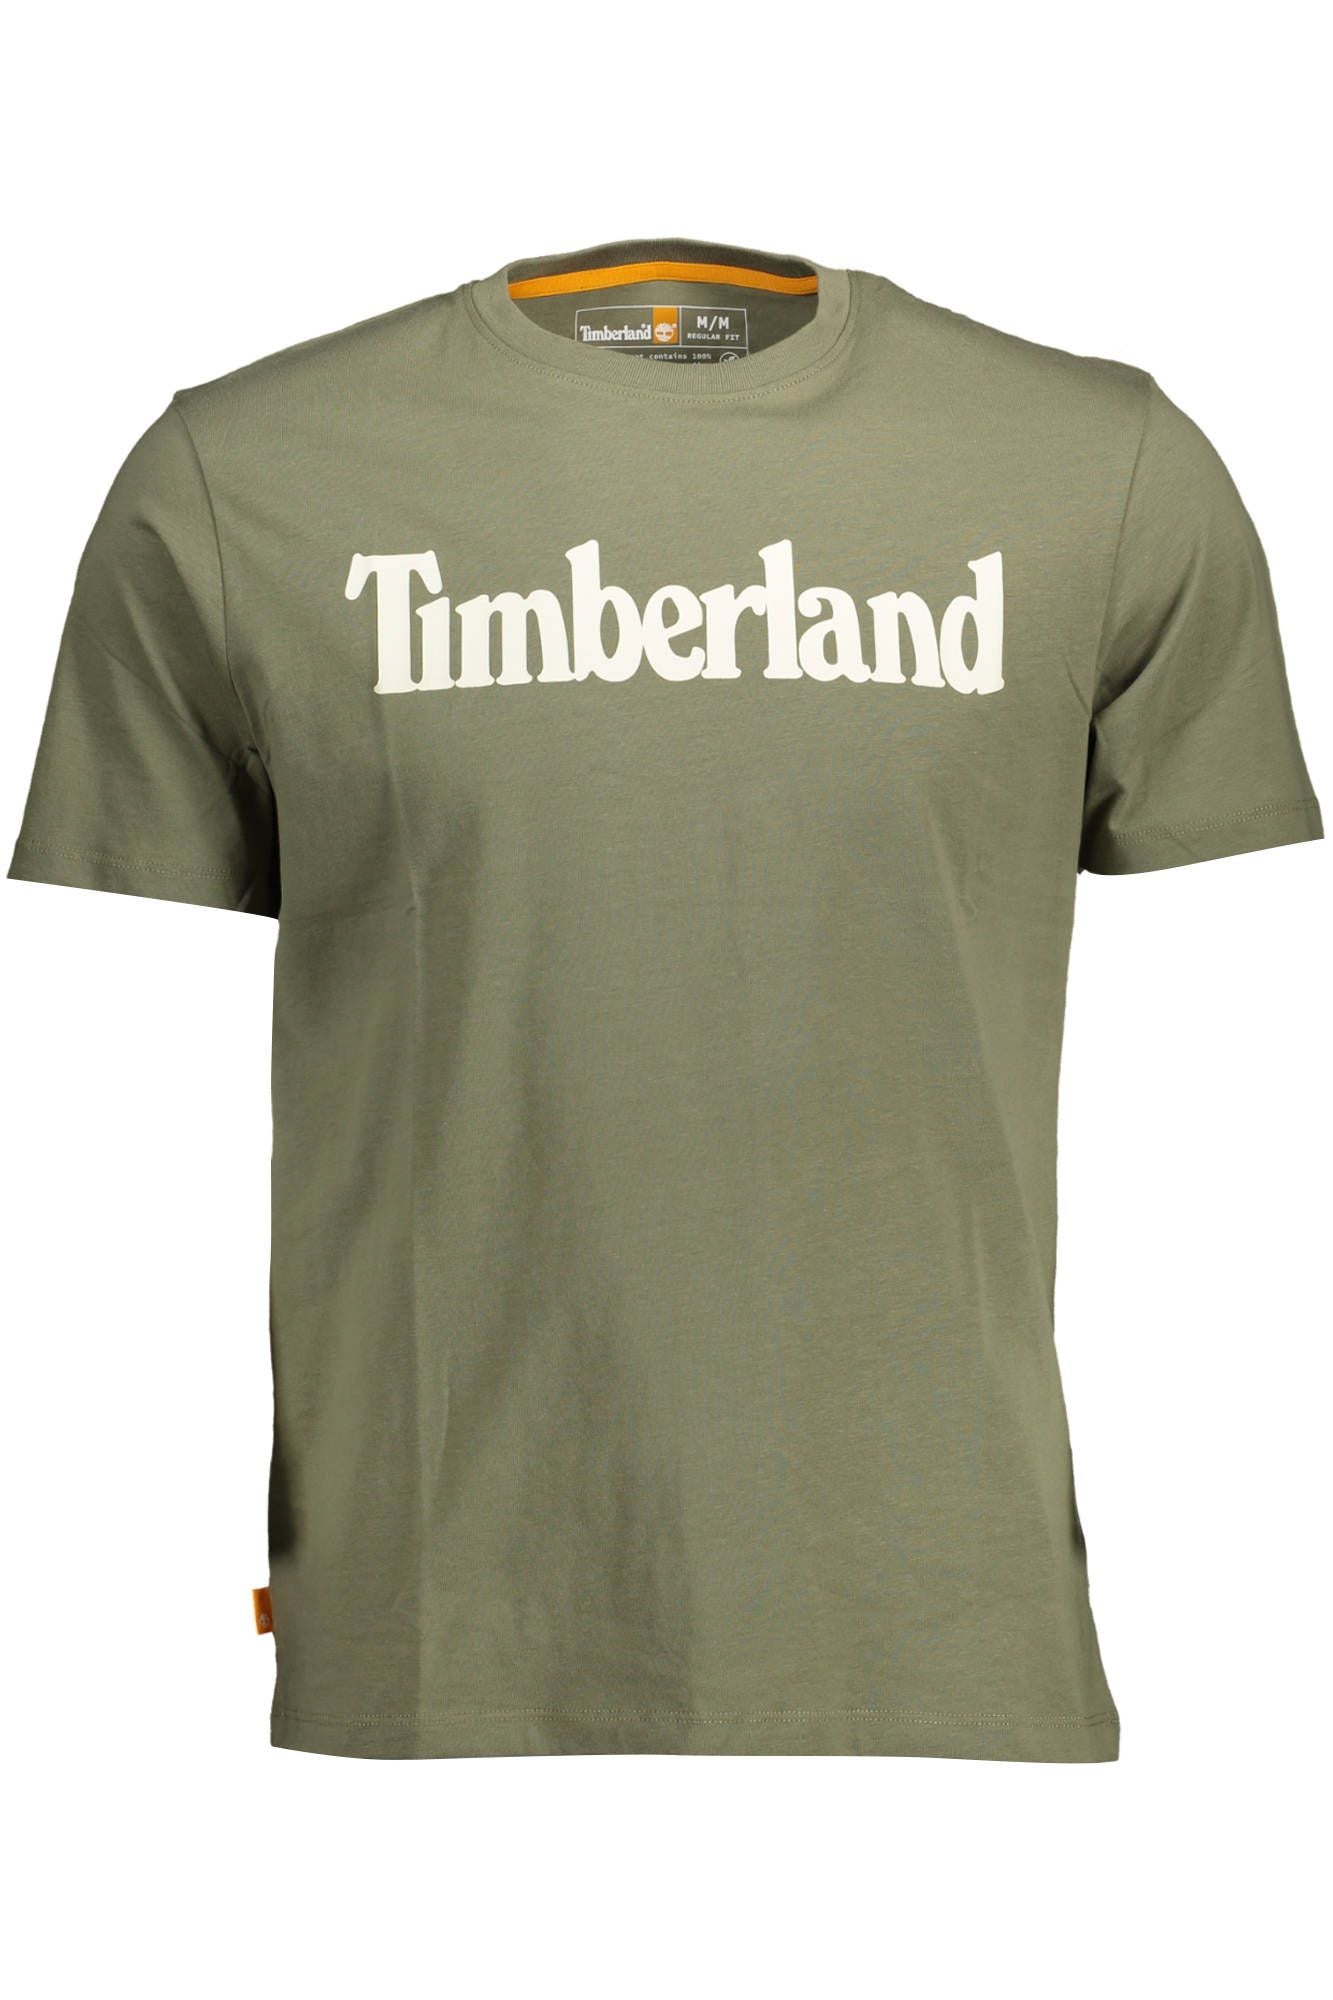 Timberland Classic Green Round Neck T-Shirt